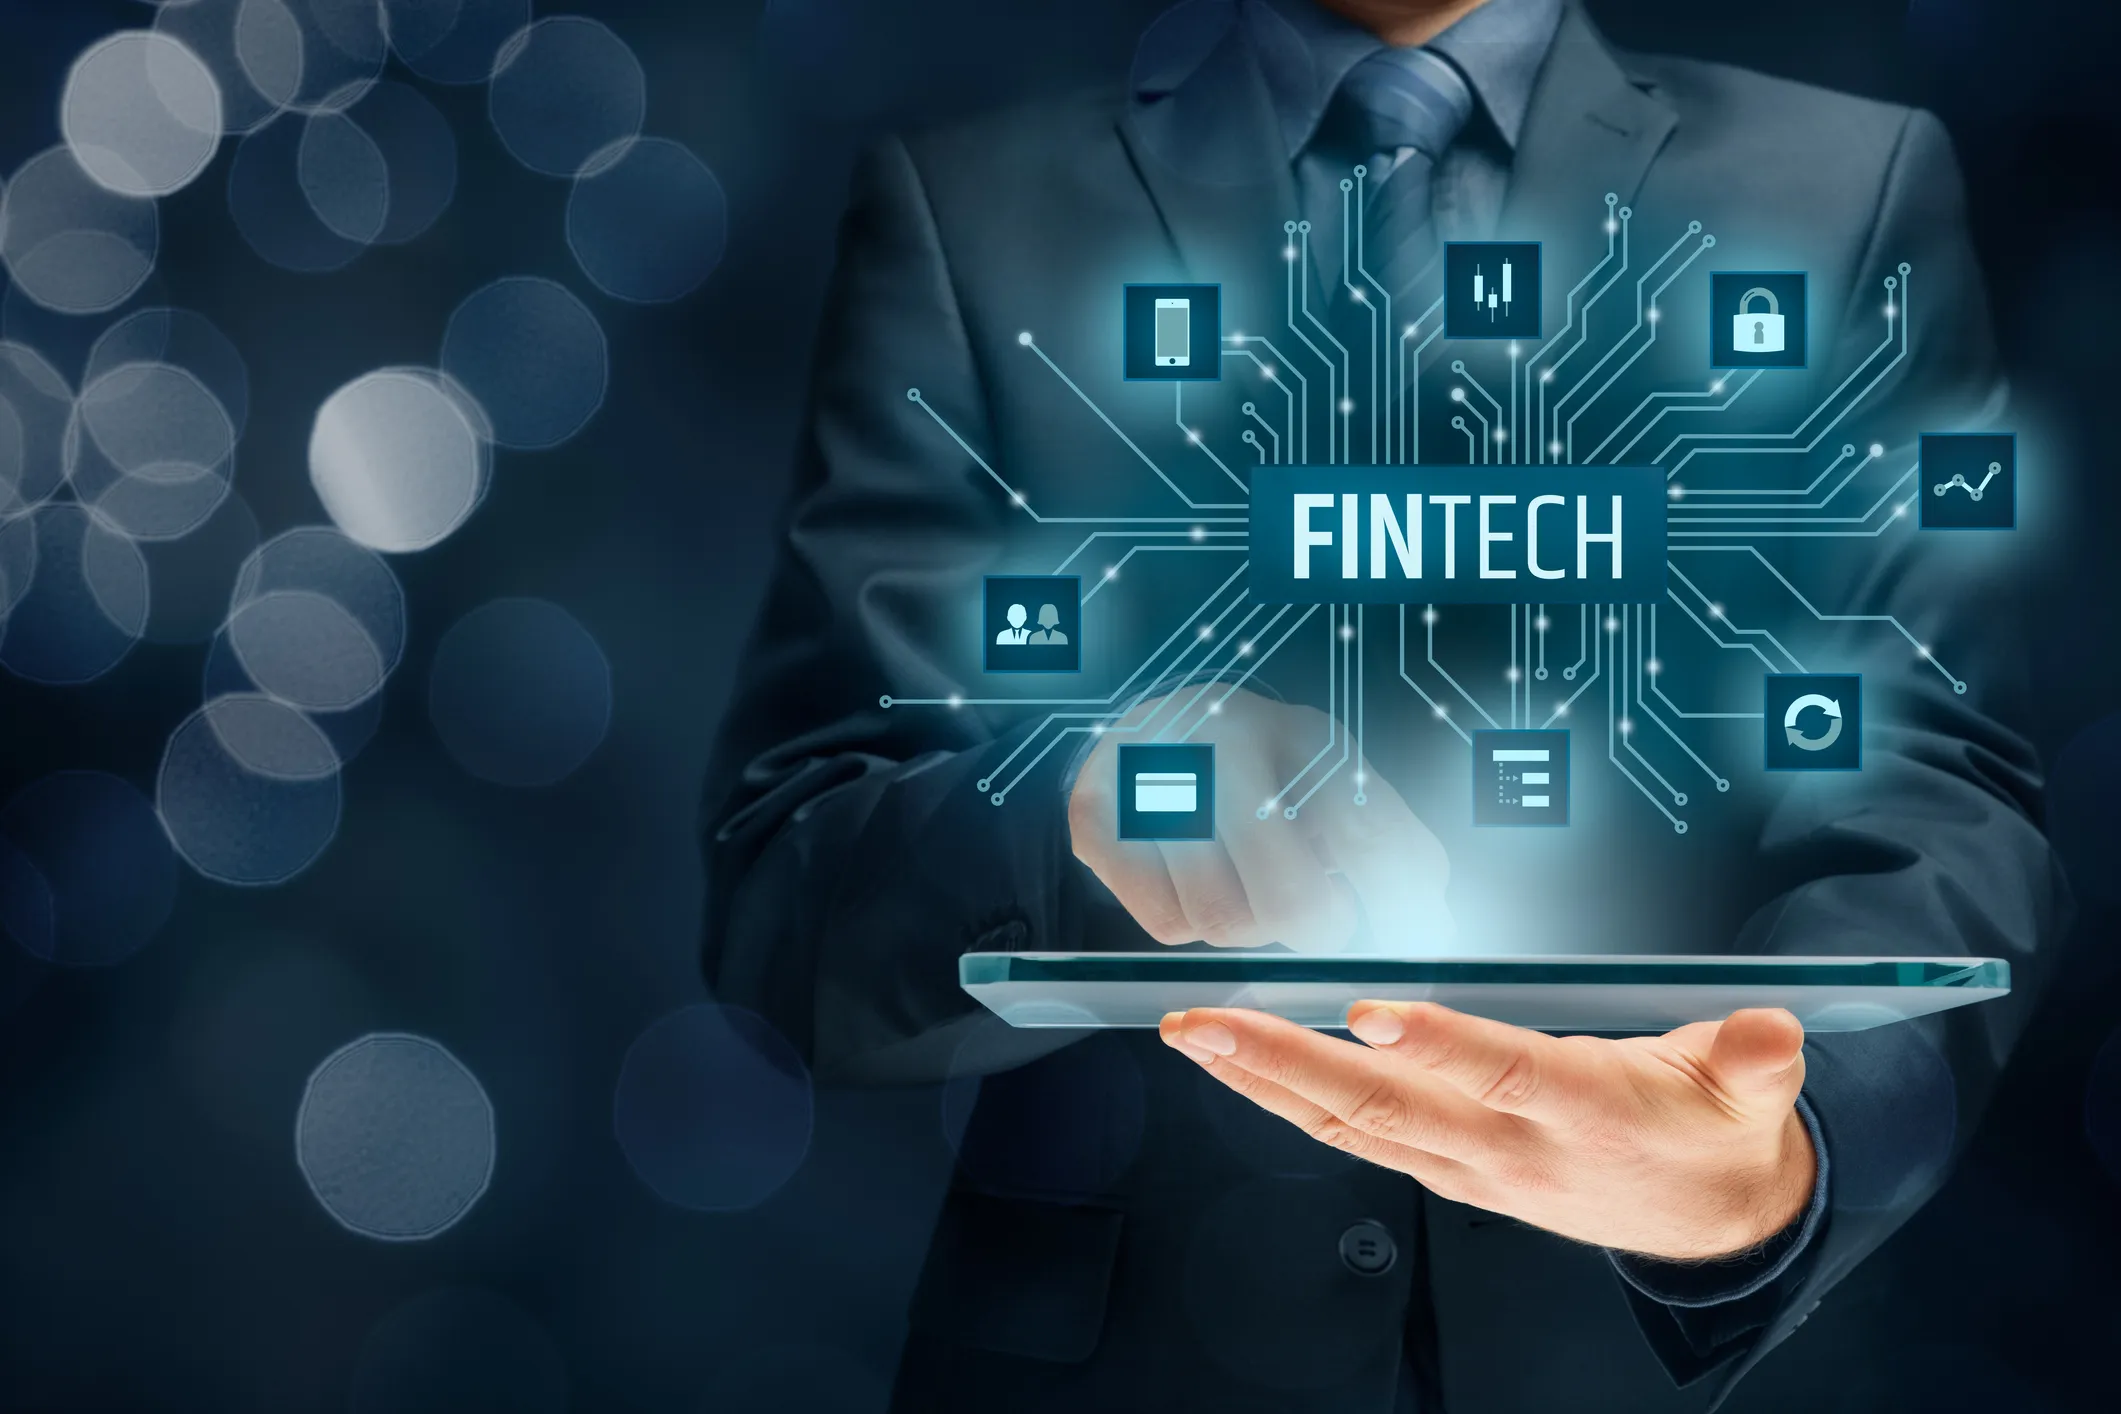 Digital payments and financial technology (fintech) companies